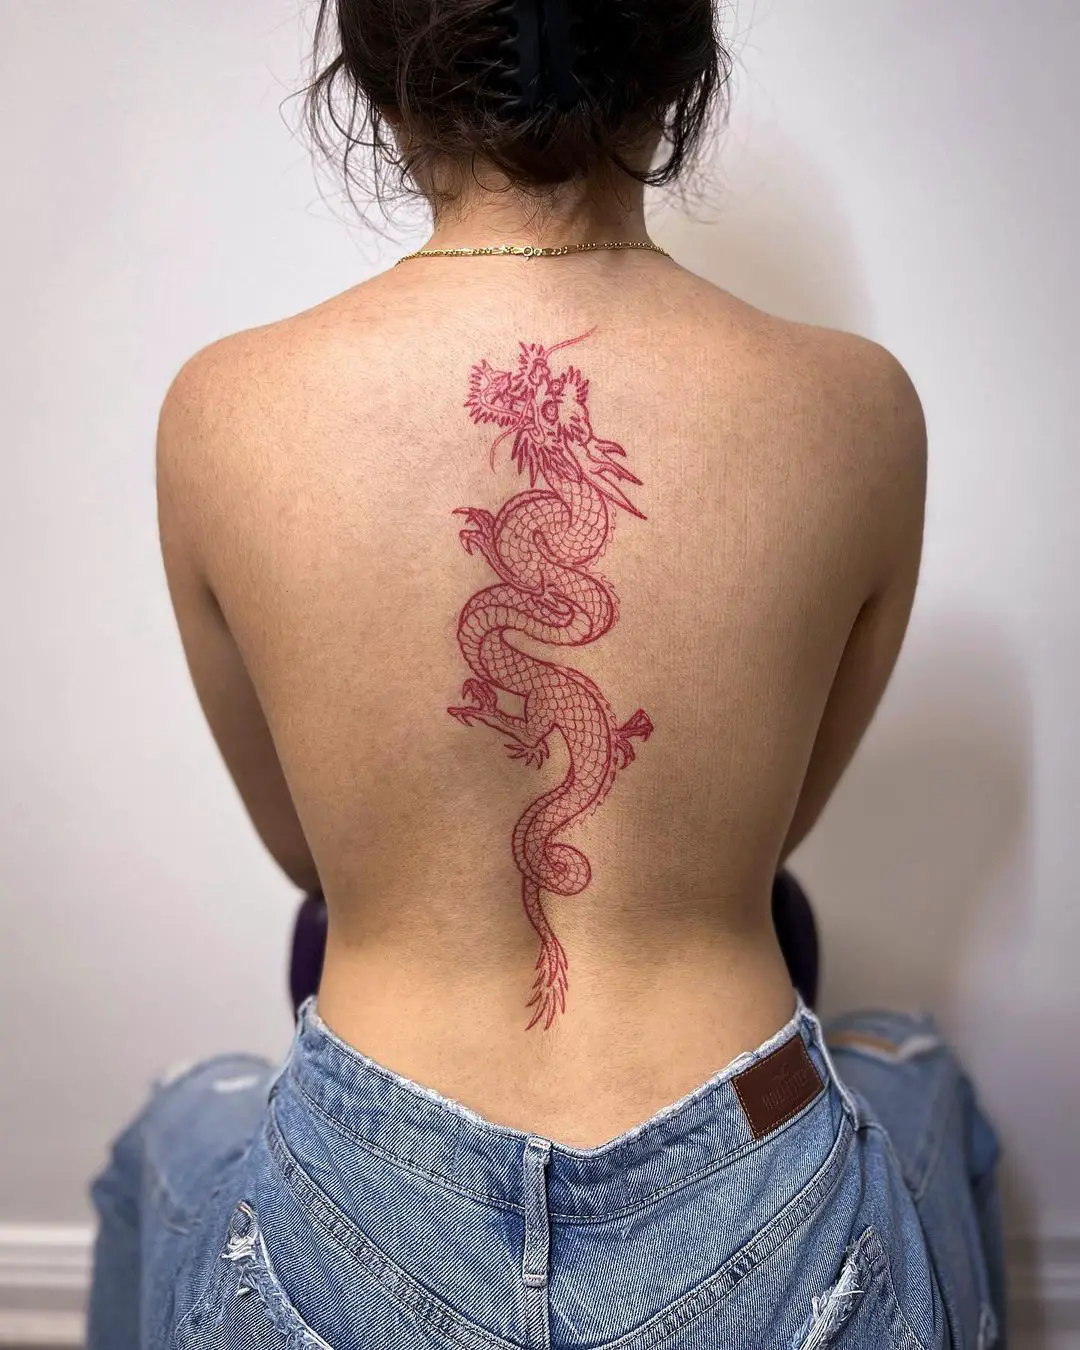 Dragon tattoo on back by yasminborges